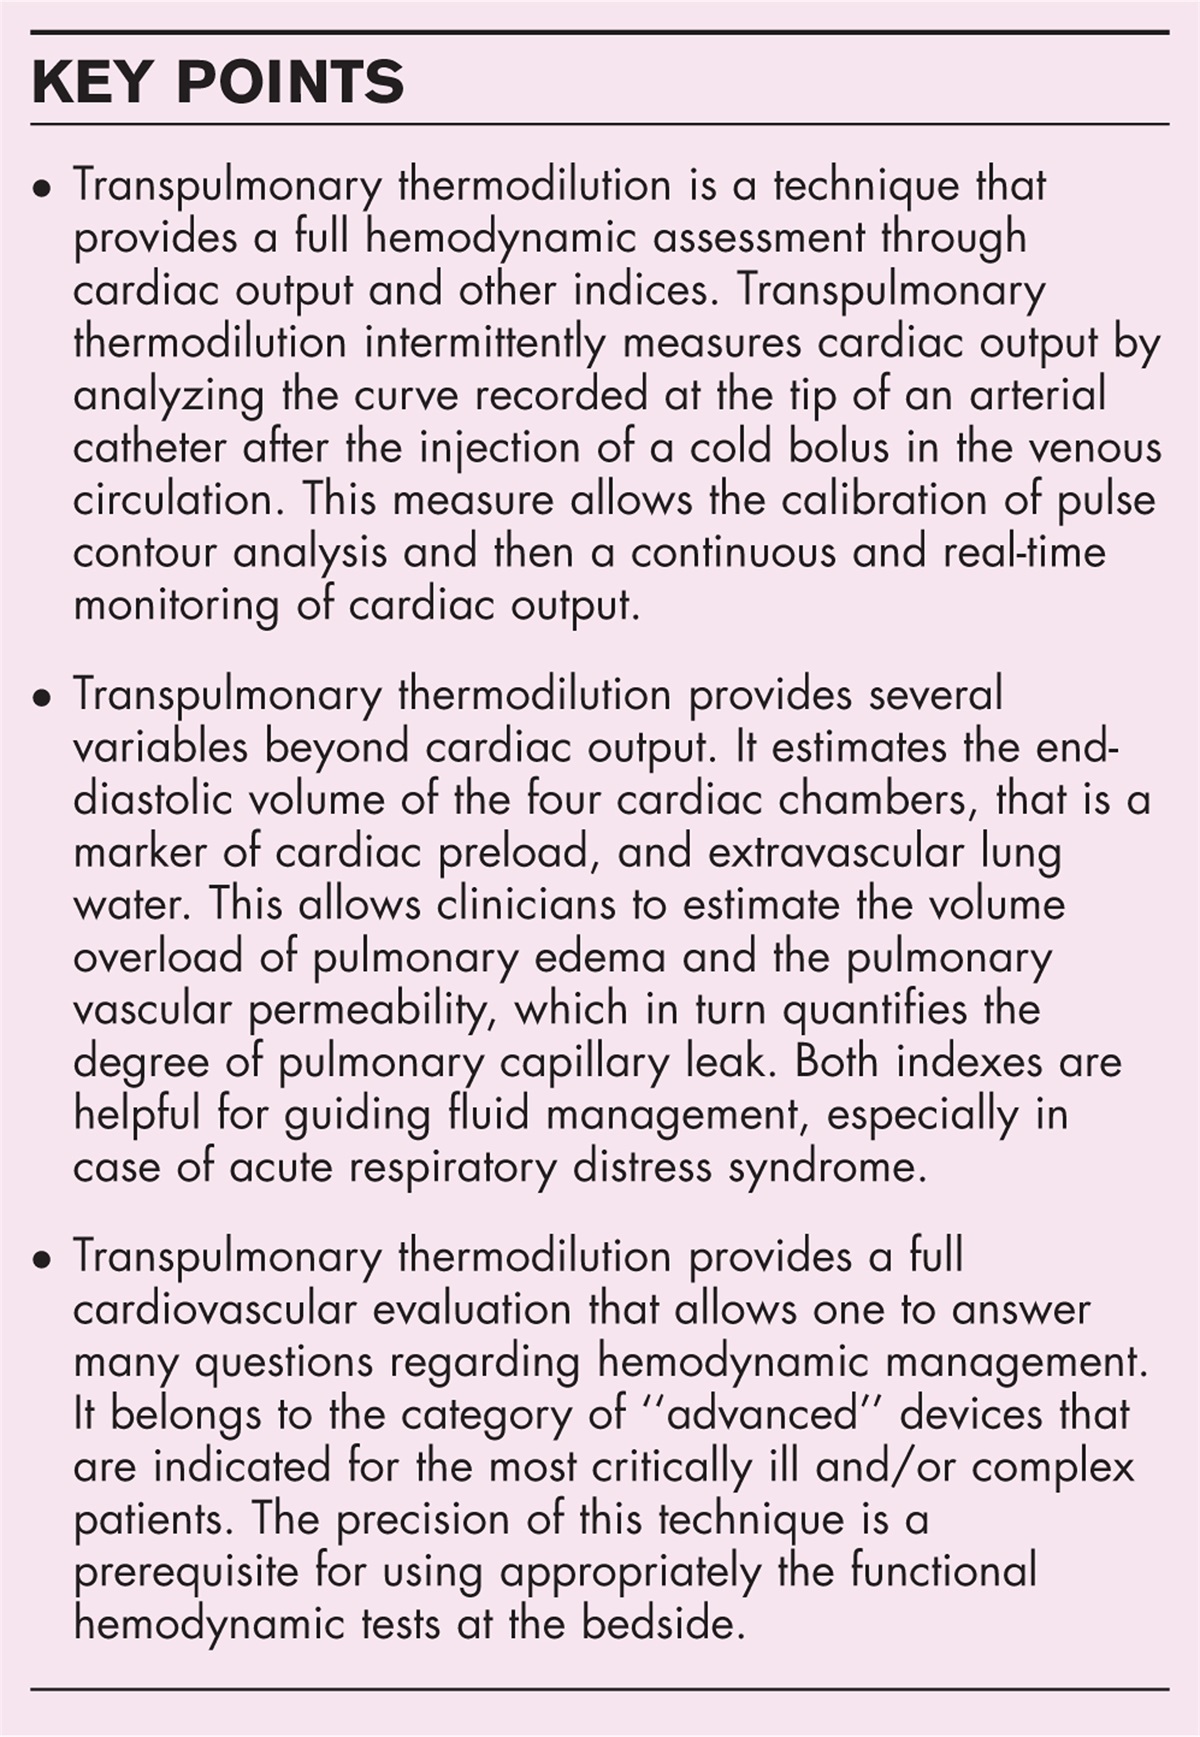 Transpulmonary thermodilution